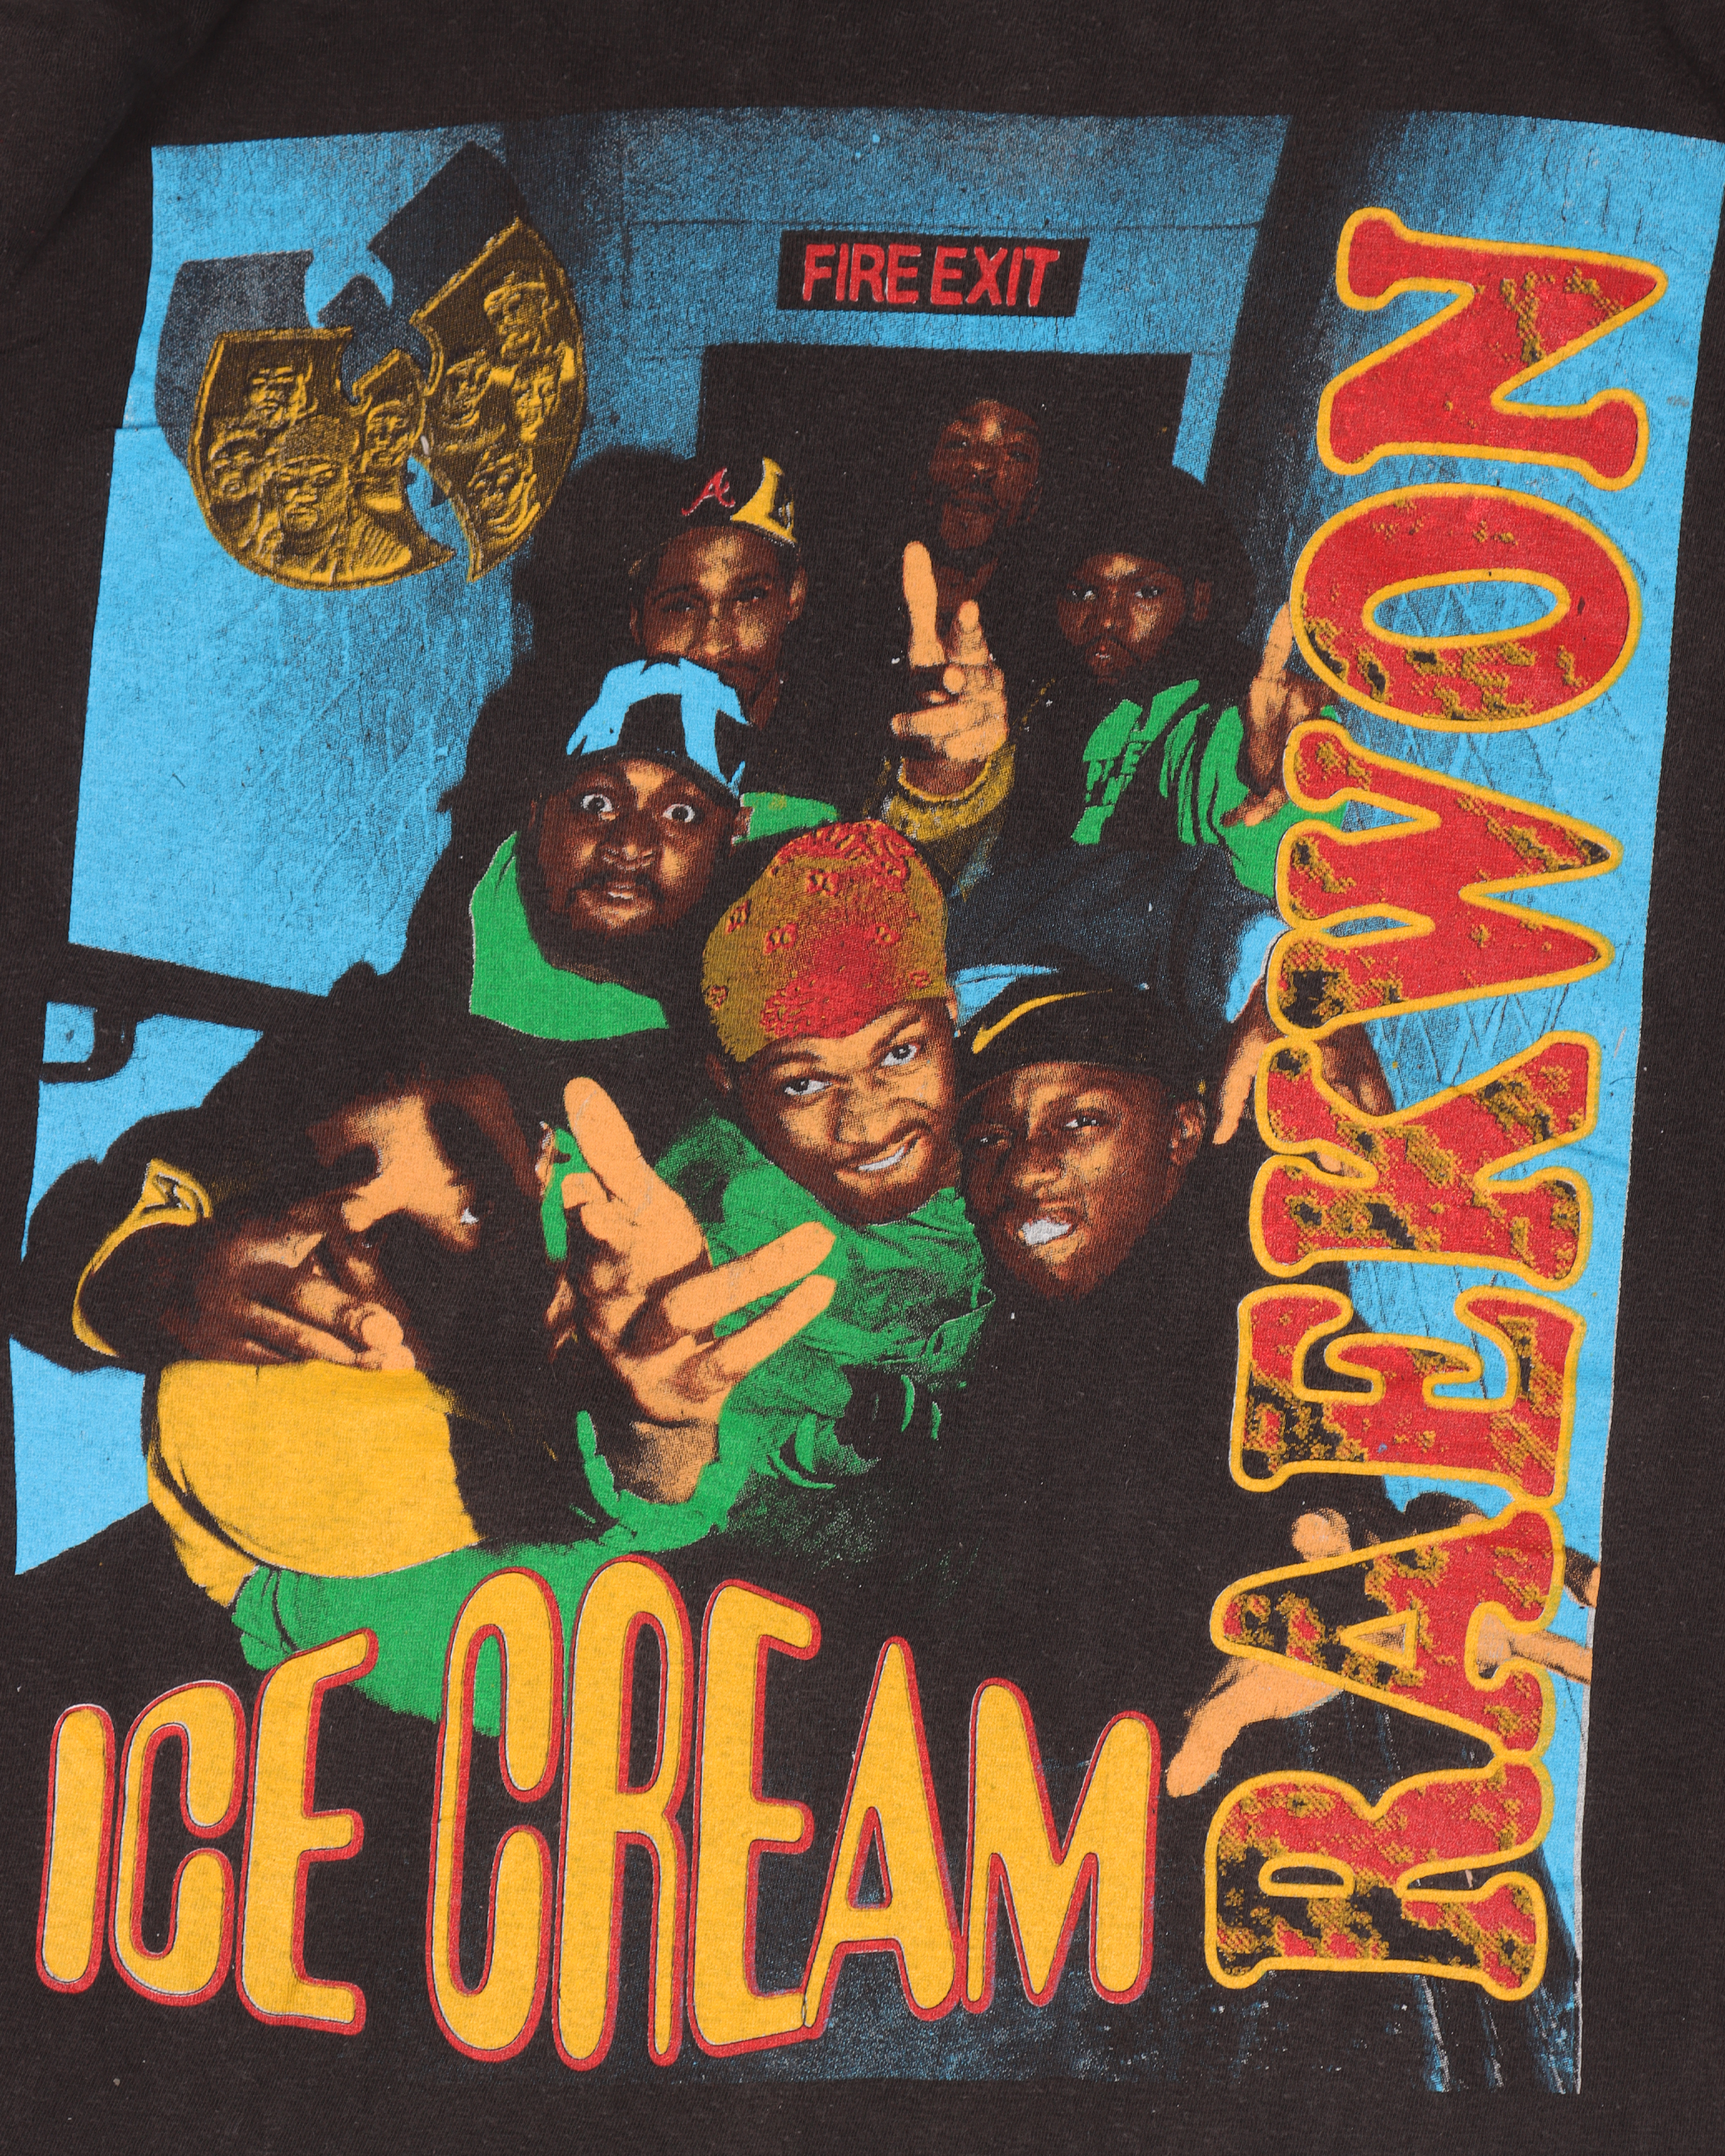 Wu-Tang Clan Raekwon 'Ice Cream' T-Shirt